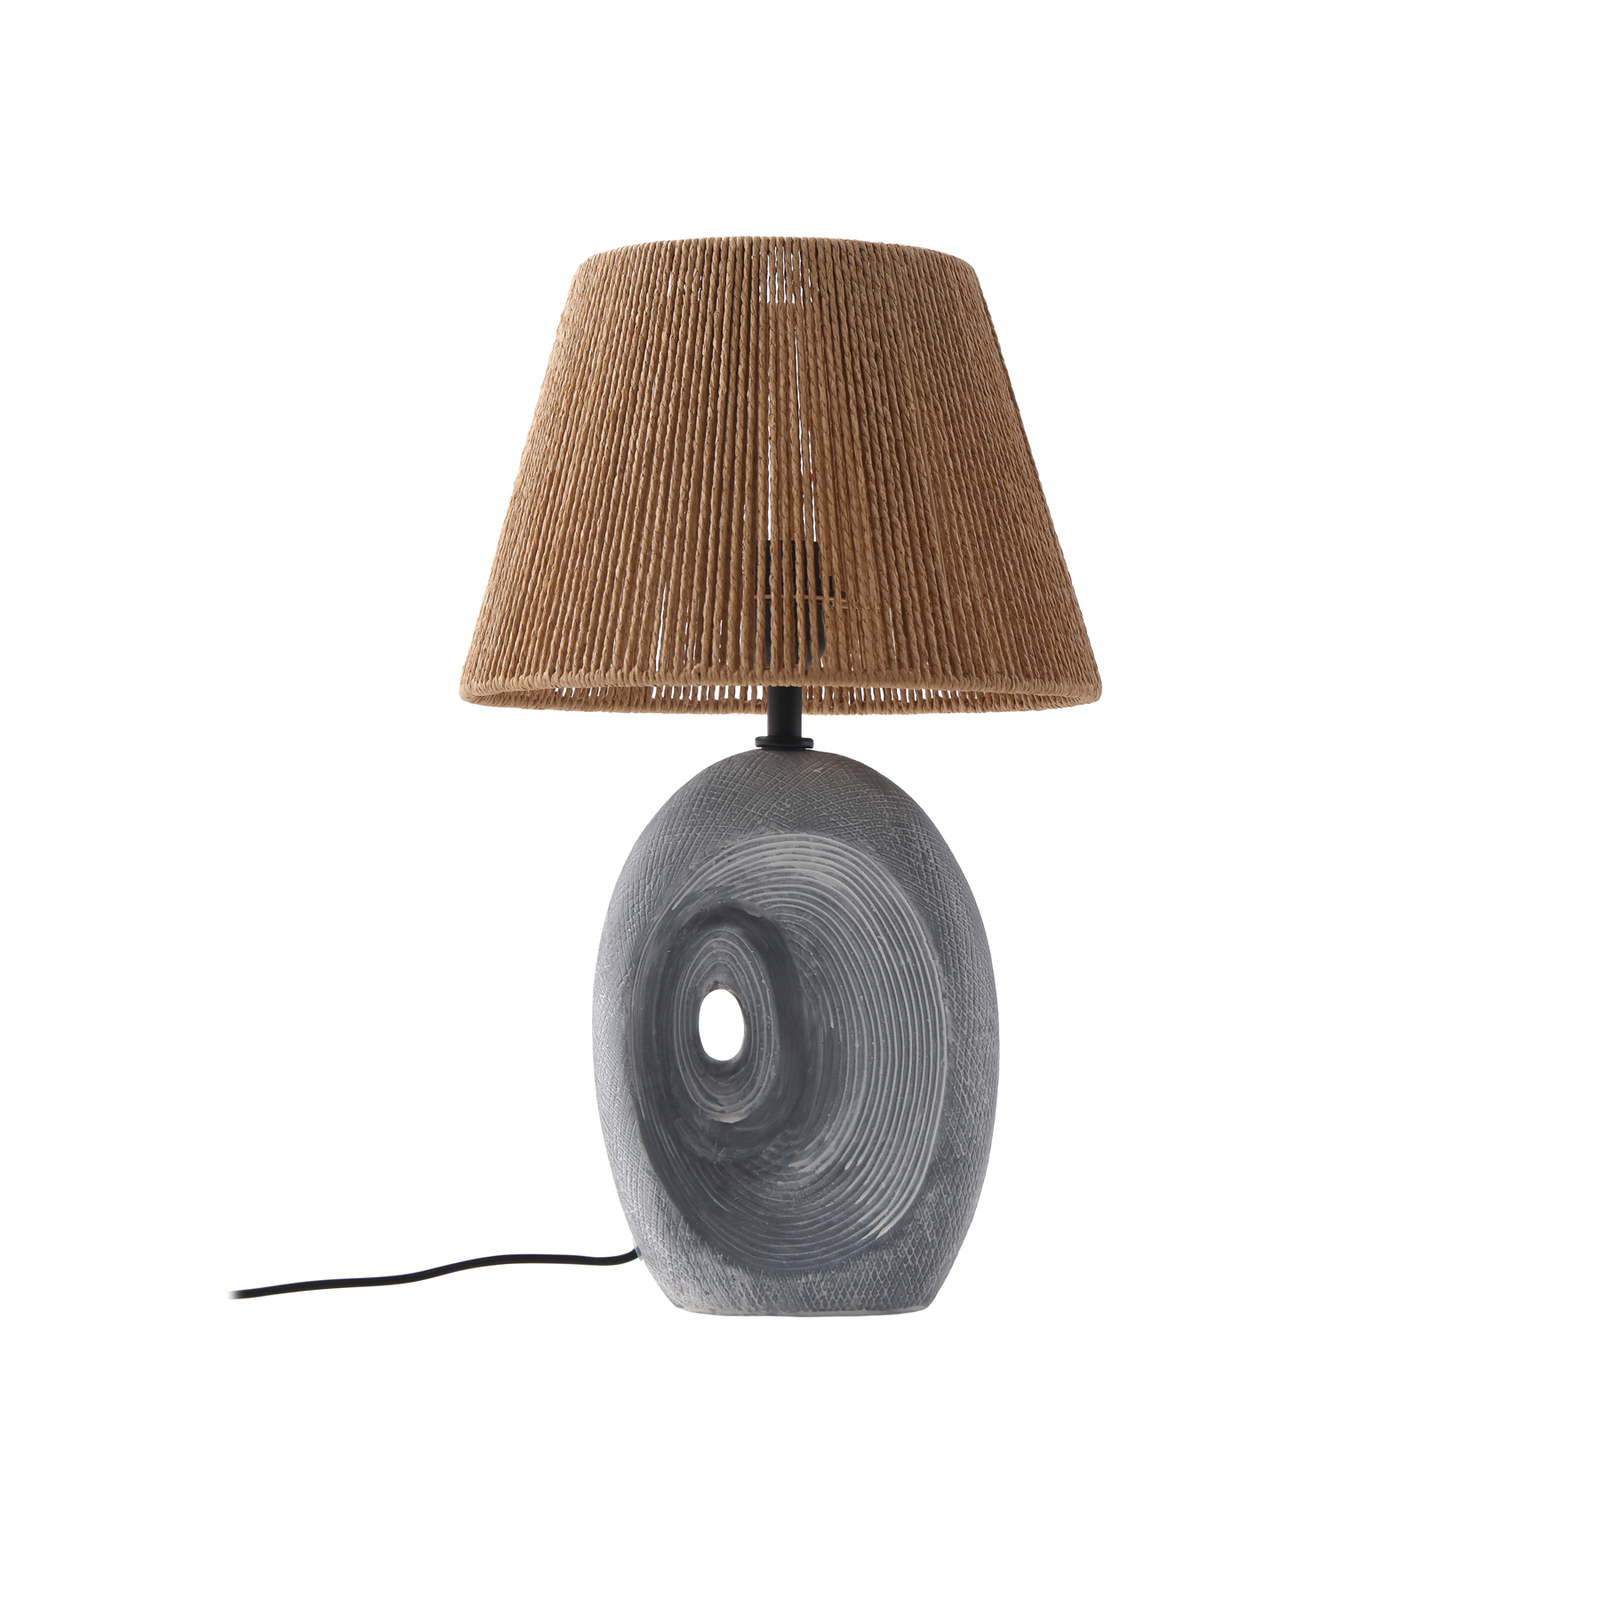 Lindby tafellamp Seasur, blauw-grijs, keramiek, papier, 29cm